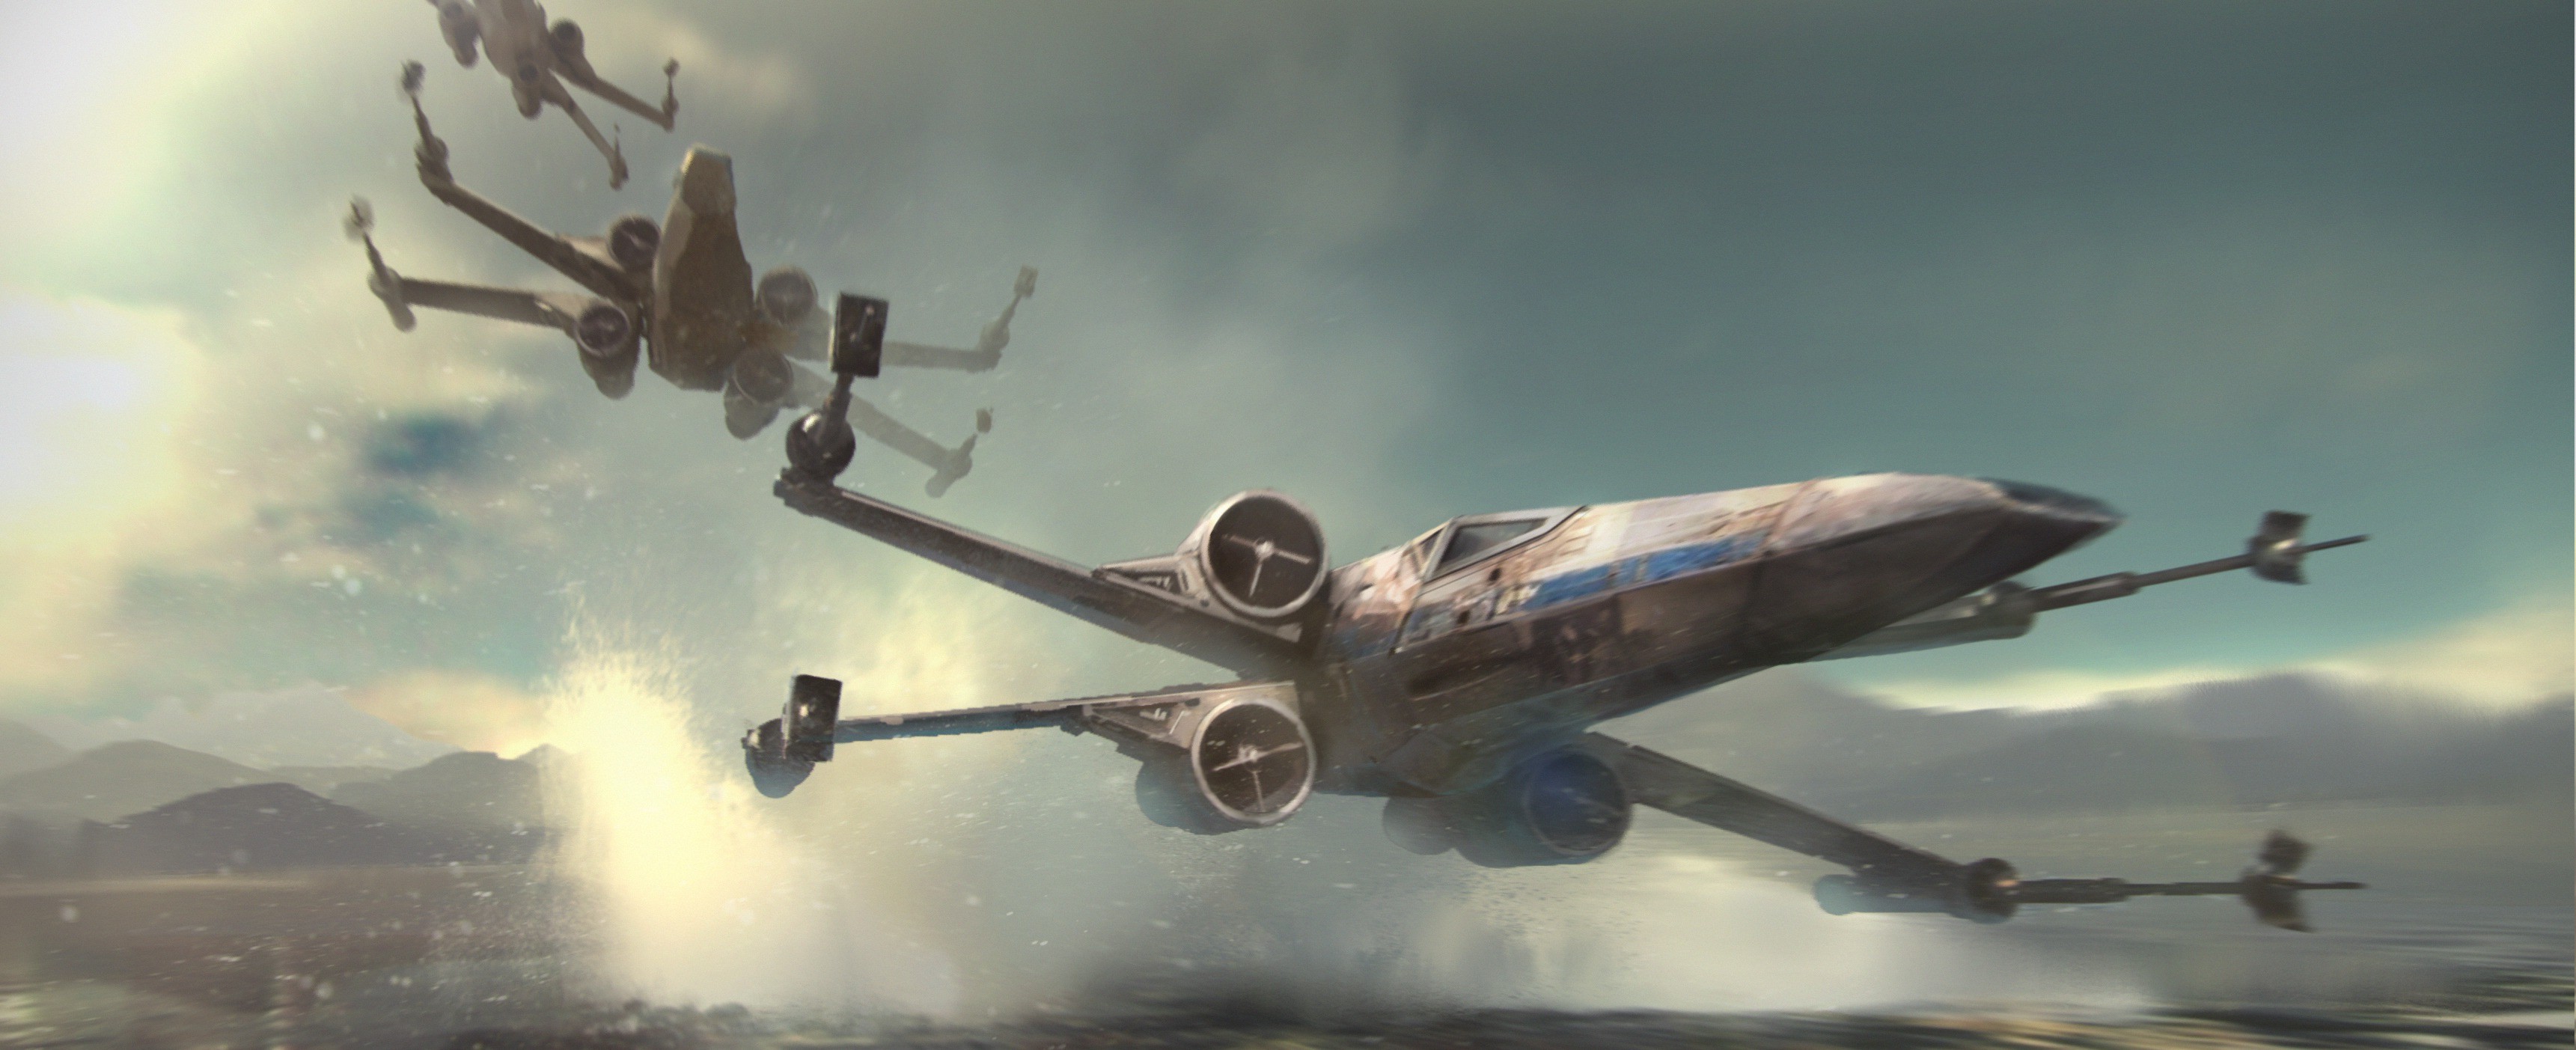 star wars x wing wallpaper,airplane,aircraft,vehicle,aviation,propeller